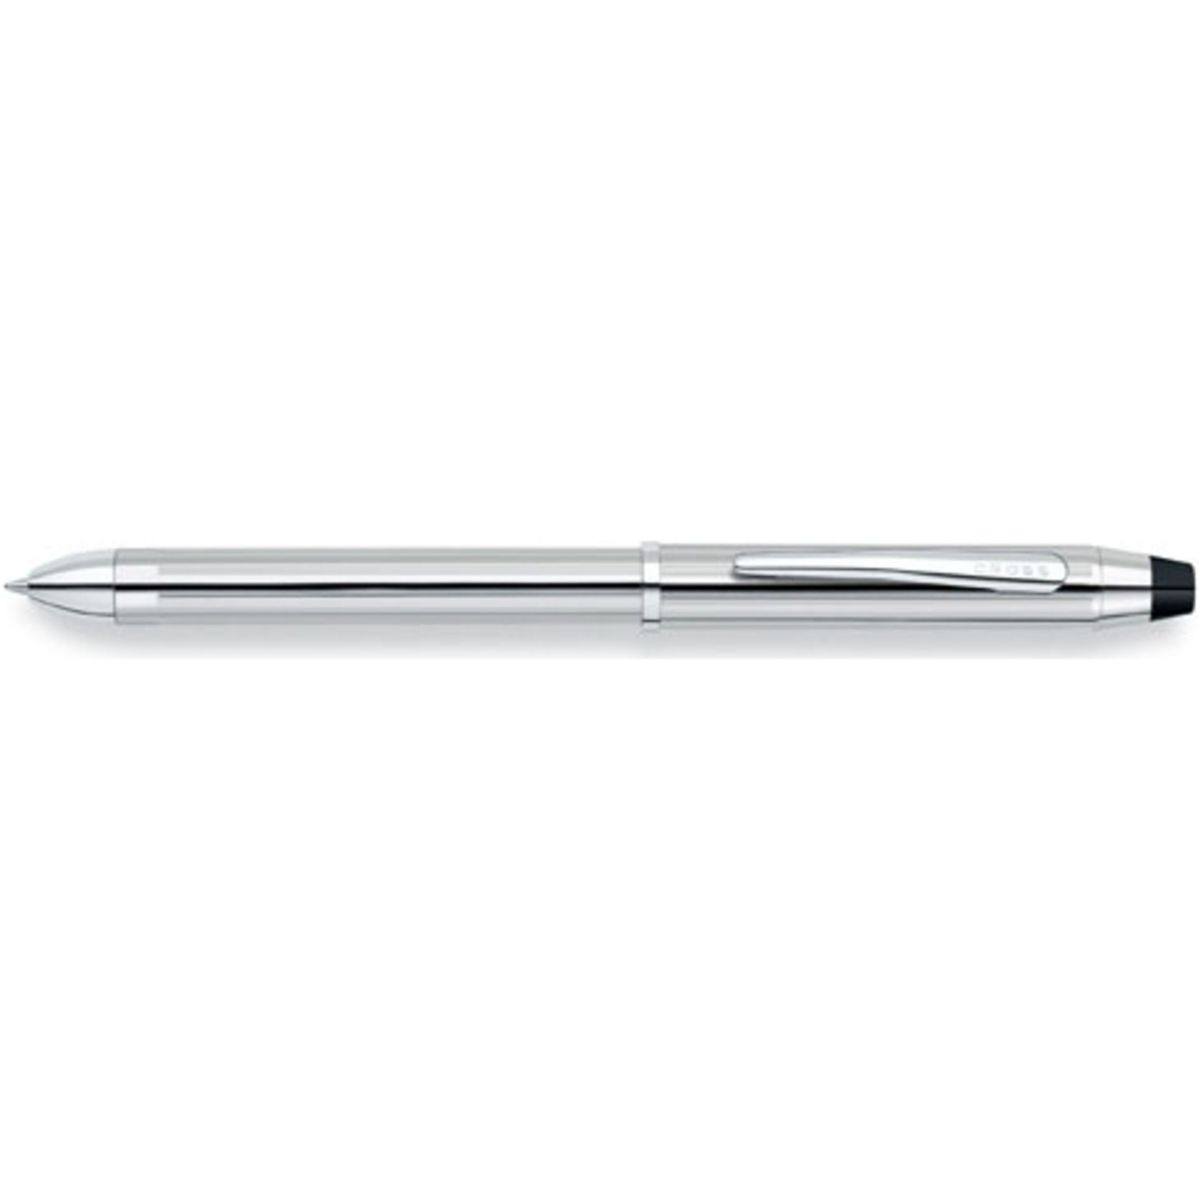 AT0090-3 Cross Tech3 Satin Black Multi-Function Pen 